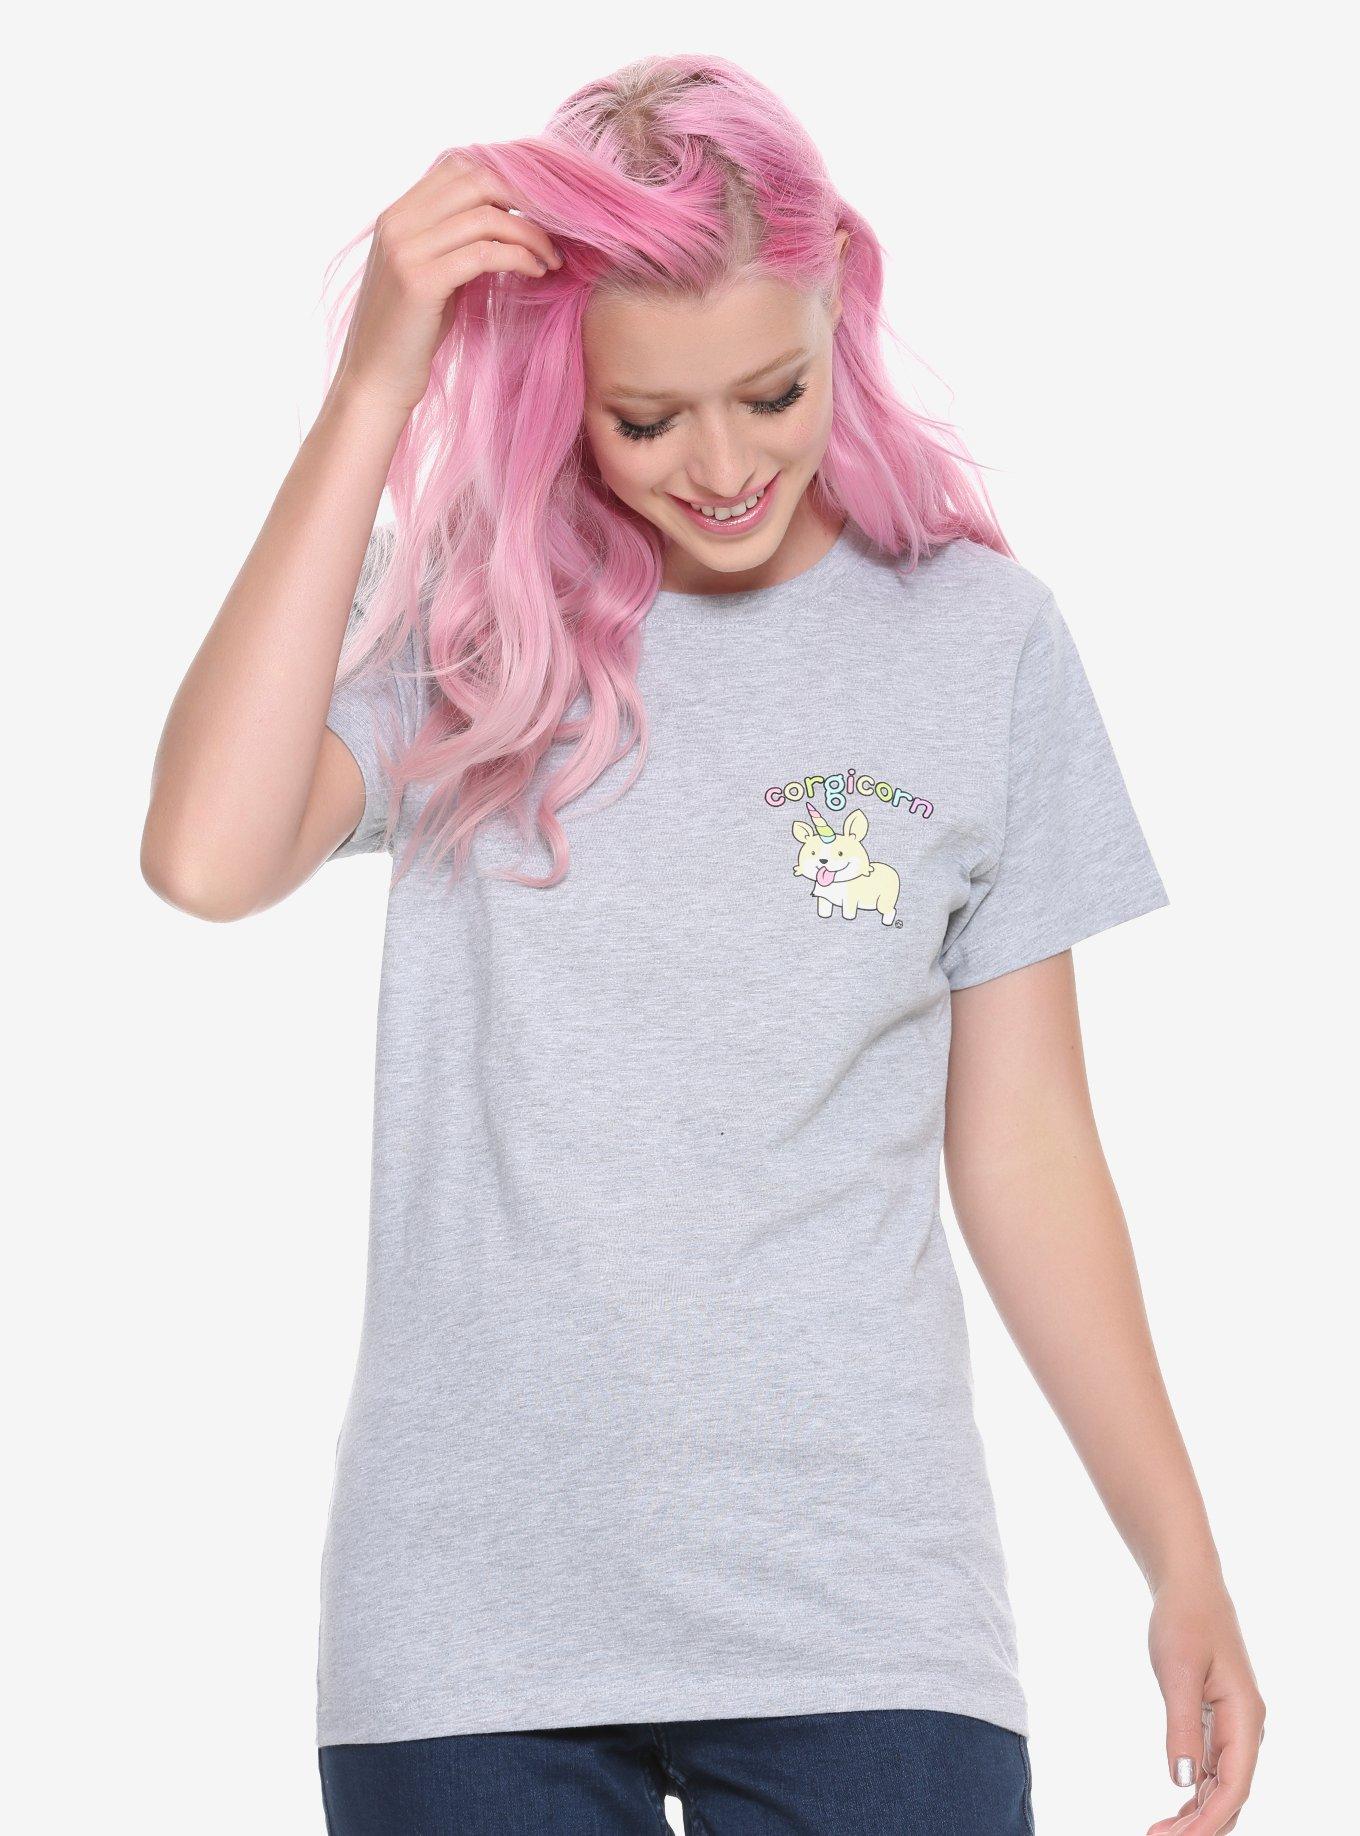 Corgicorn Girls T-Shirt, MULTICOLOR, hi-res